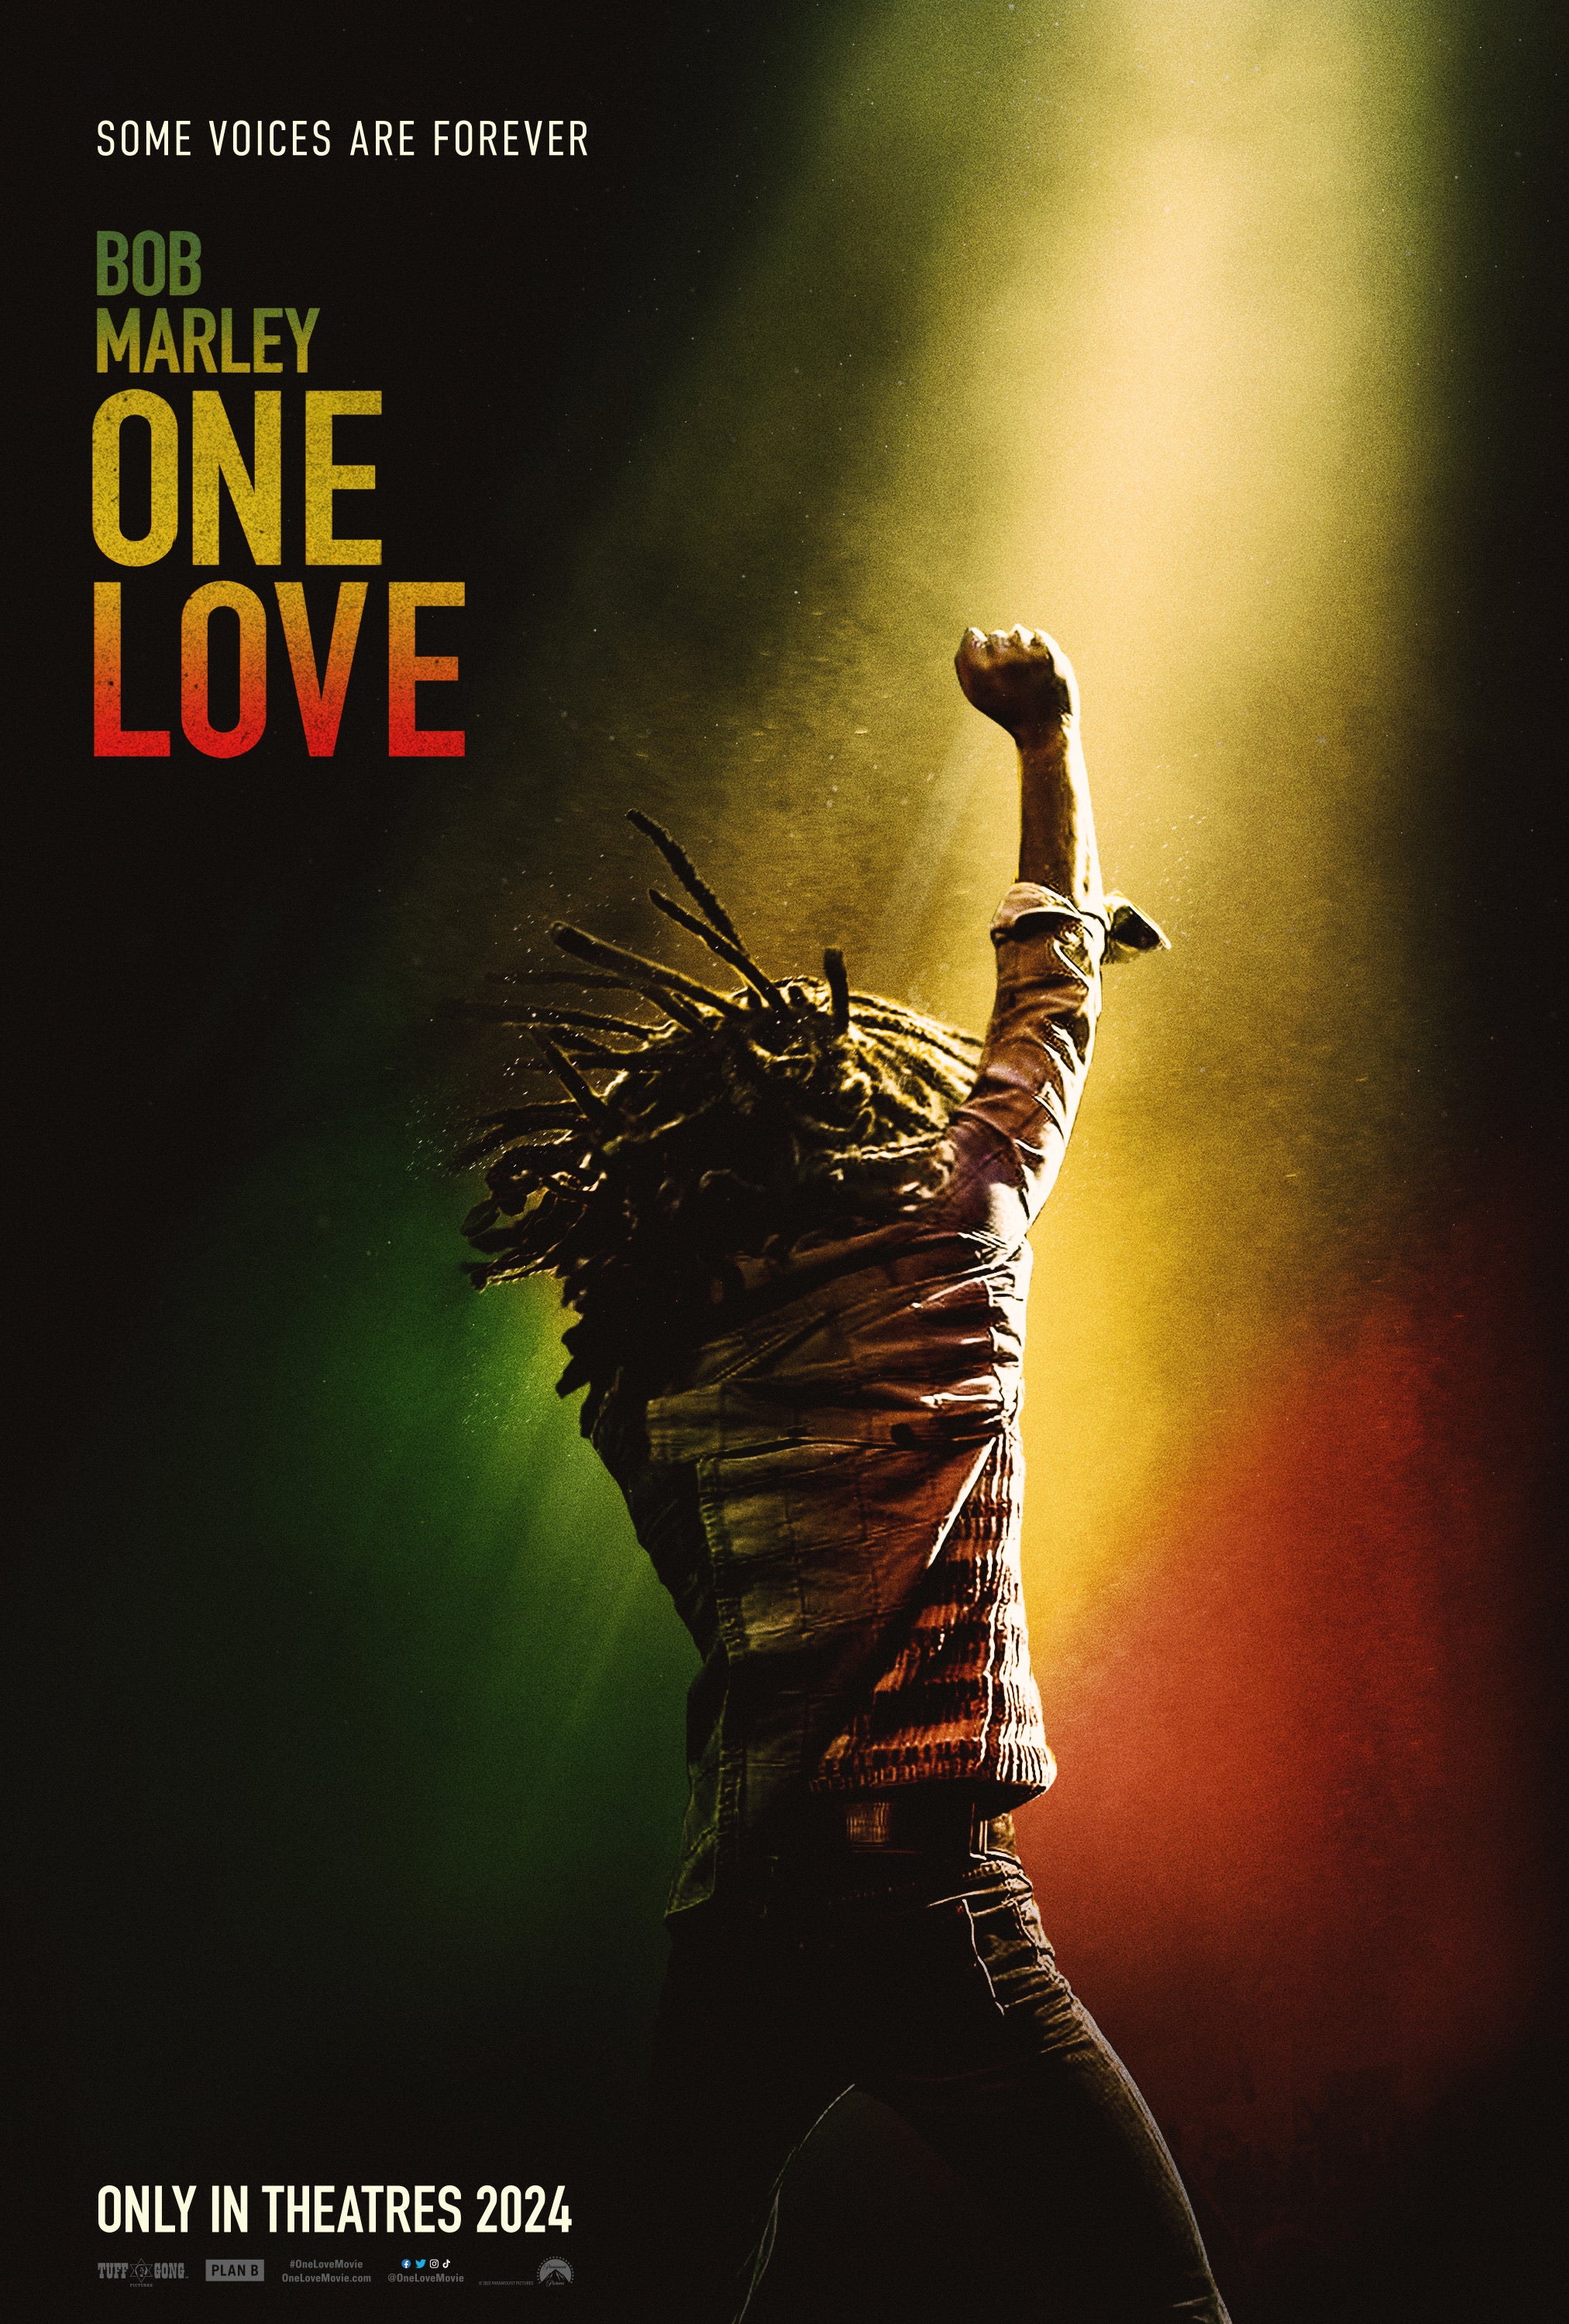 Kingsley Ben-Adir to Play Reggae Legend Bob Marley In Biopic